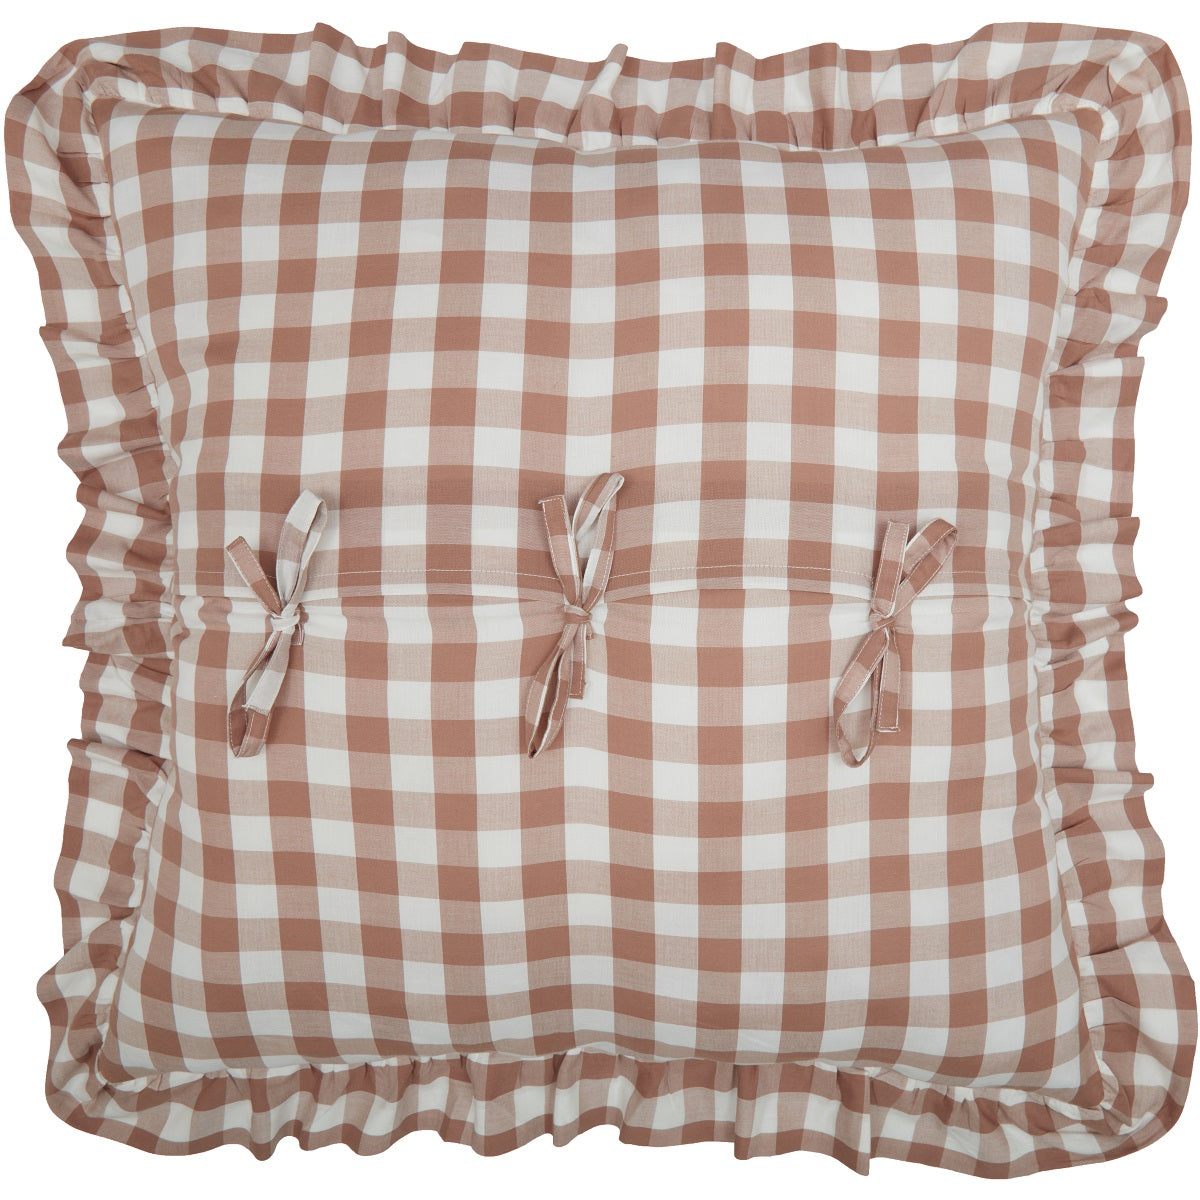 Annie Buffalo Portabella Check Ruffled Fabric Pillow 18x18 VHC Brands